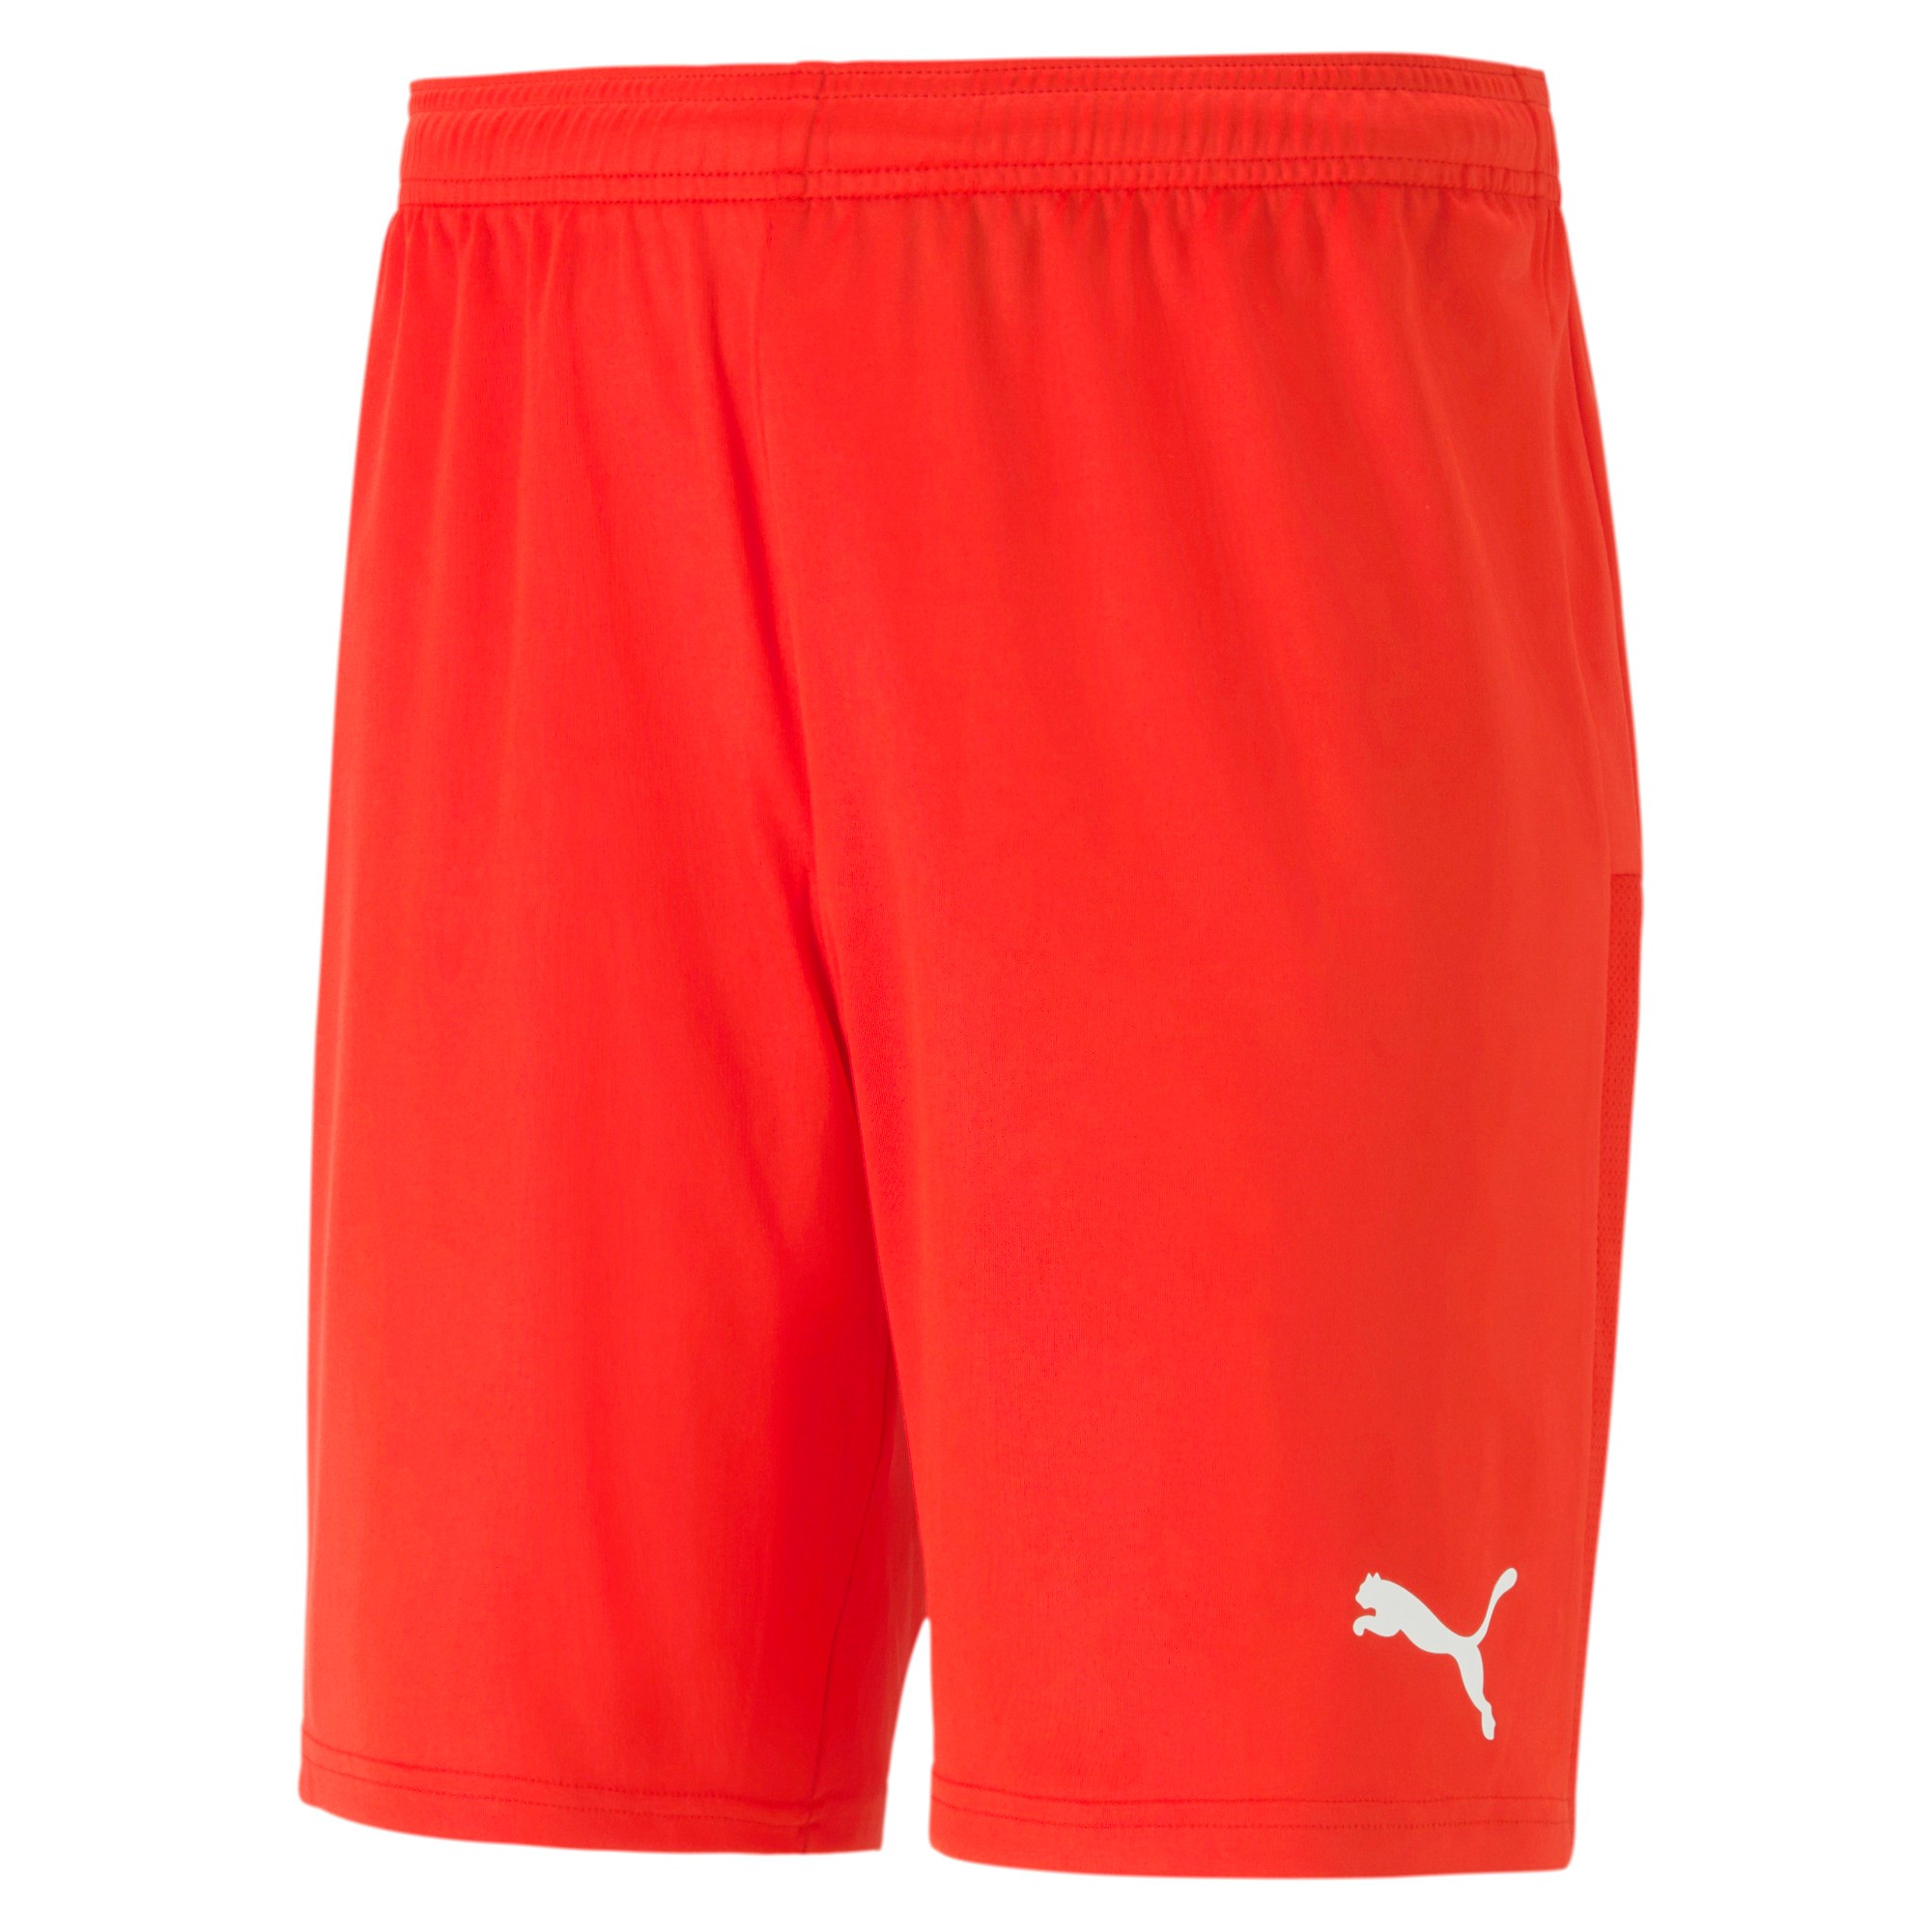 PUMA Herren BTS Shorts Trainingshose Kurze Sporthose 654416 Rot